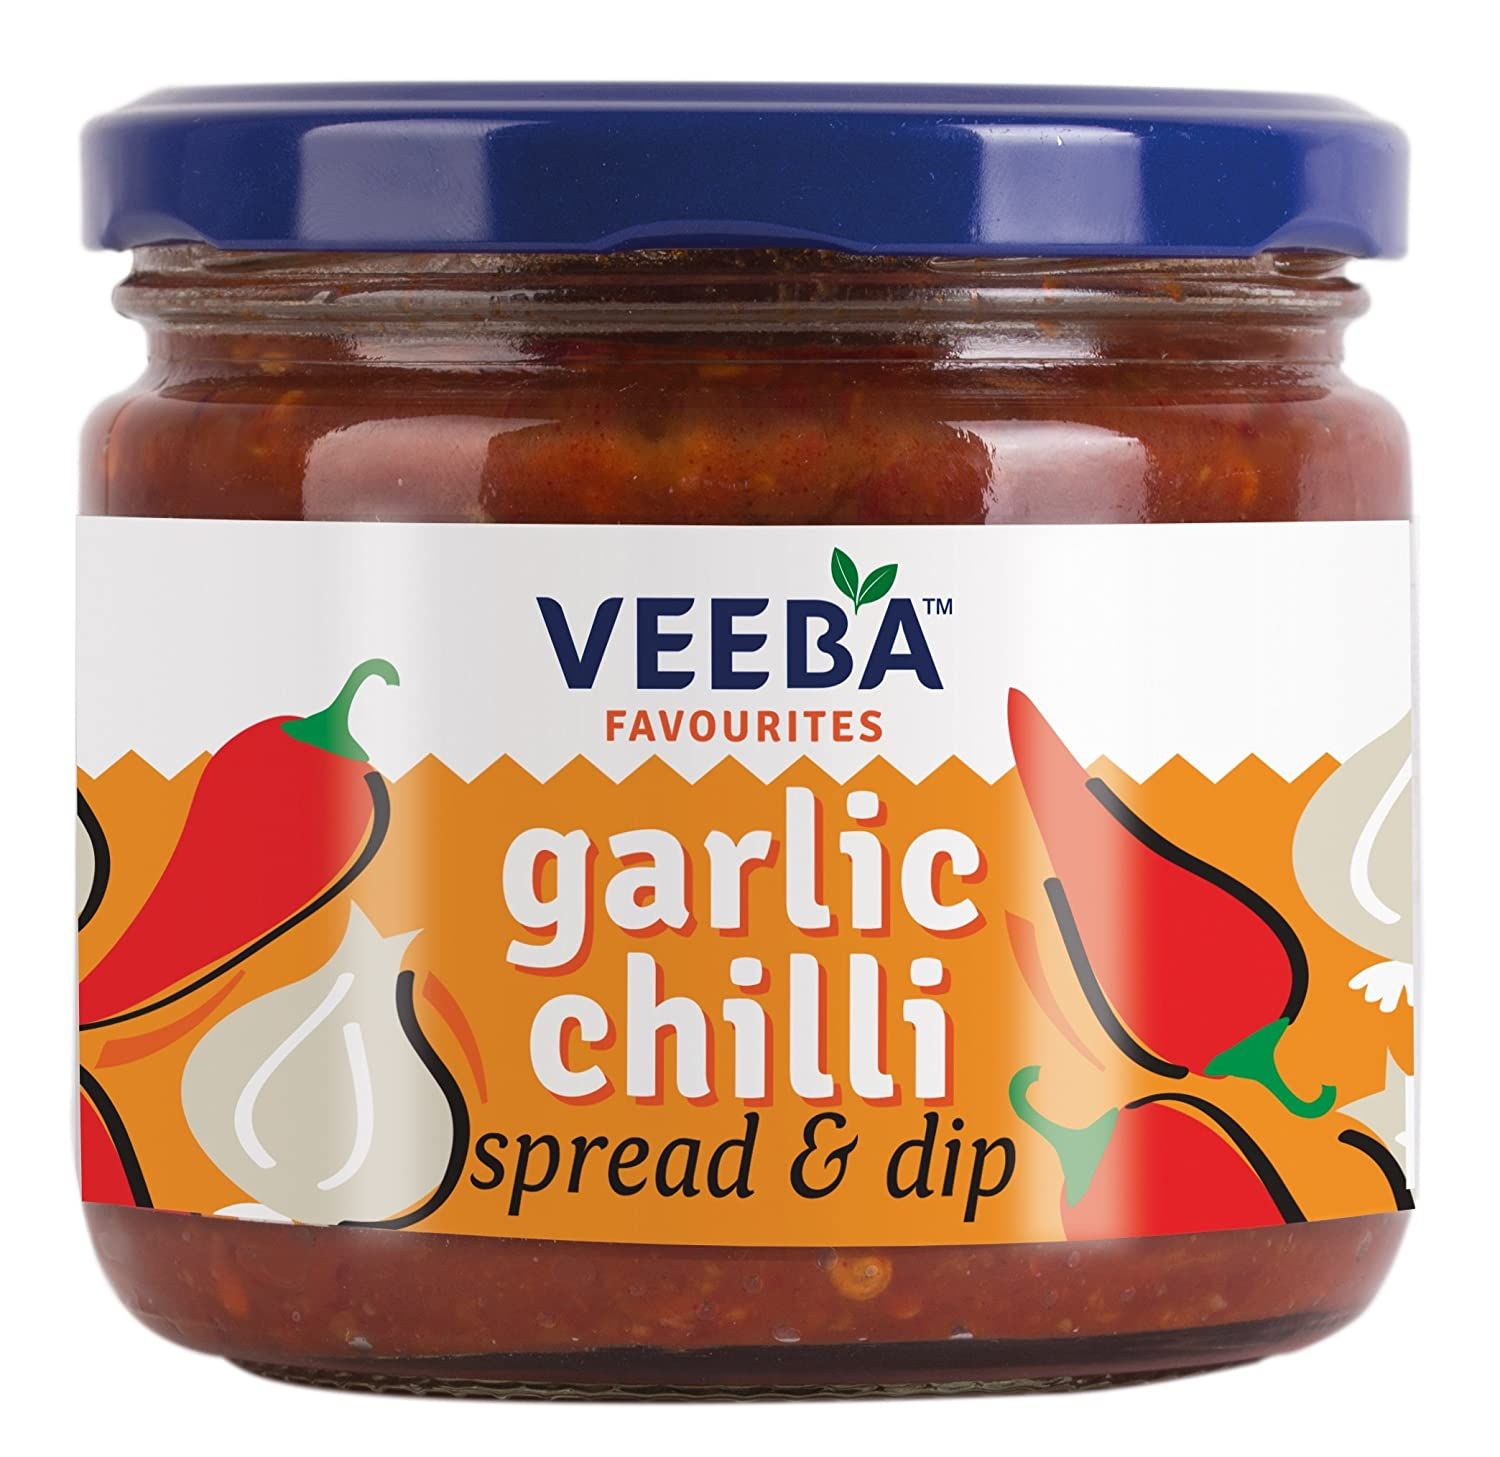 Veeba Garlic Chilli Spread and Dip Image